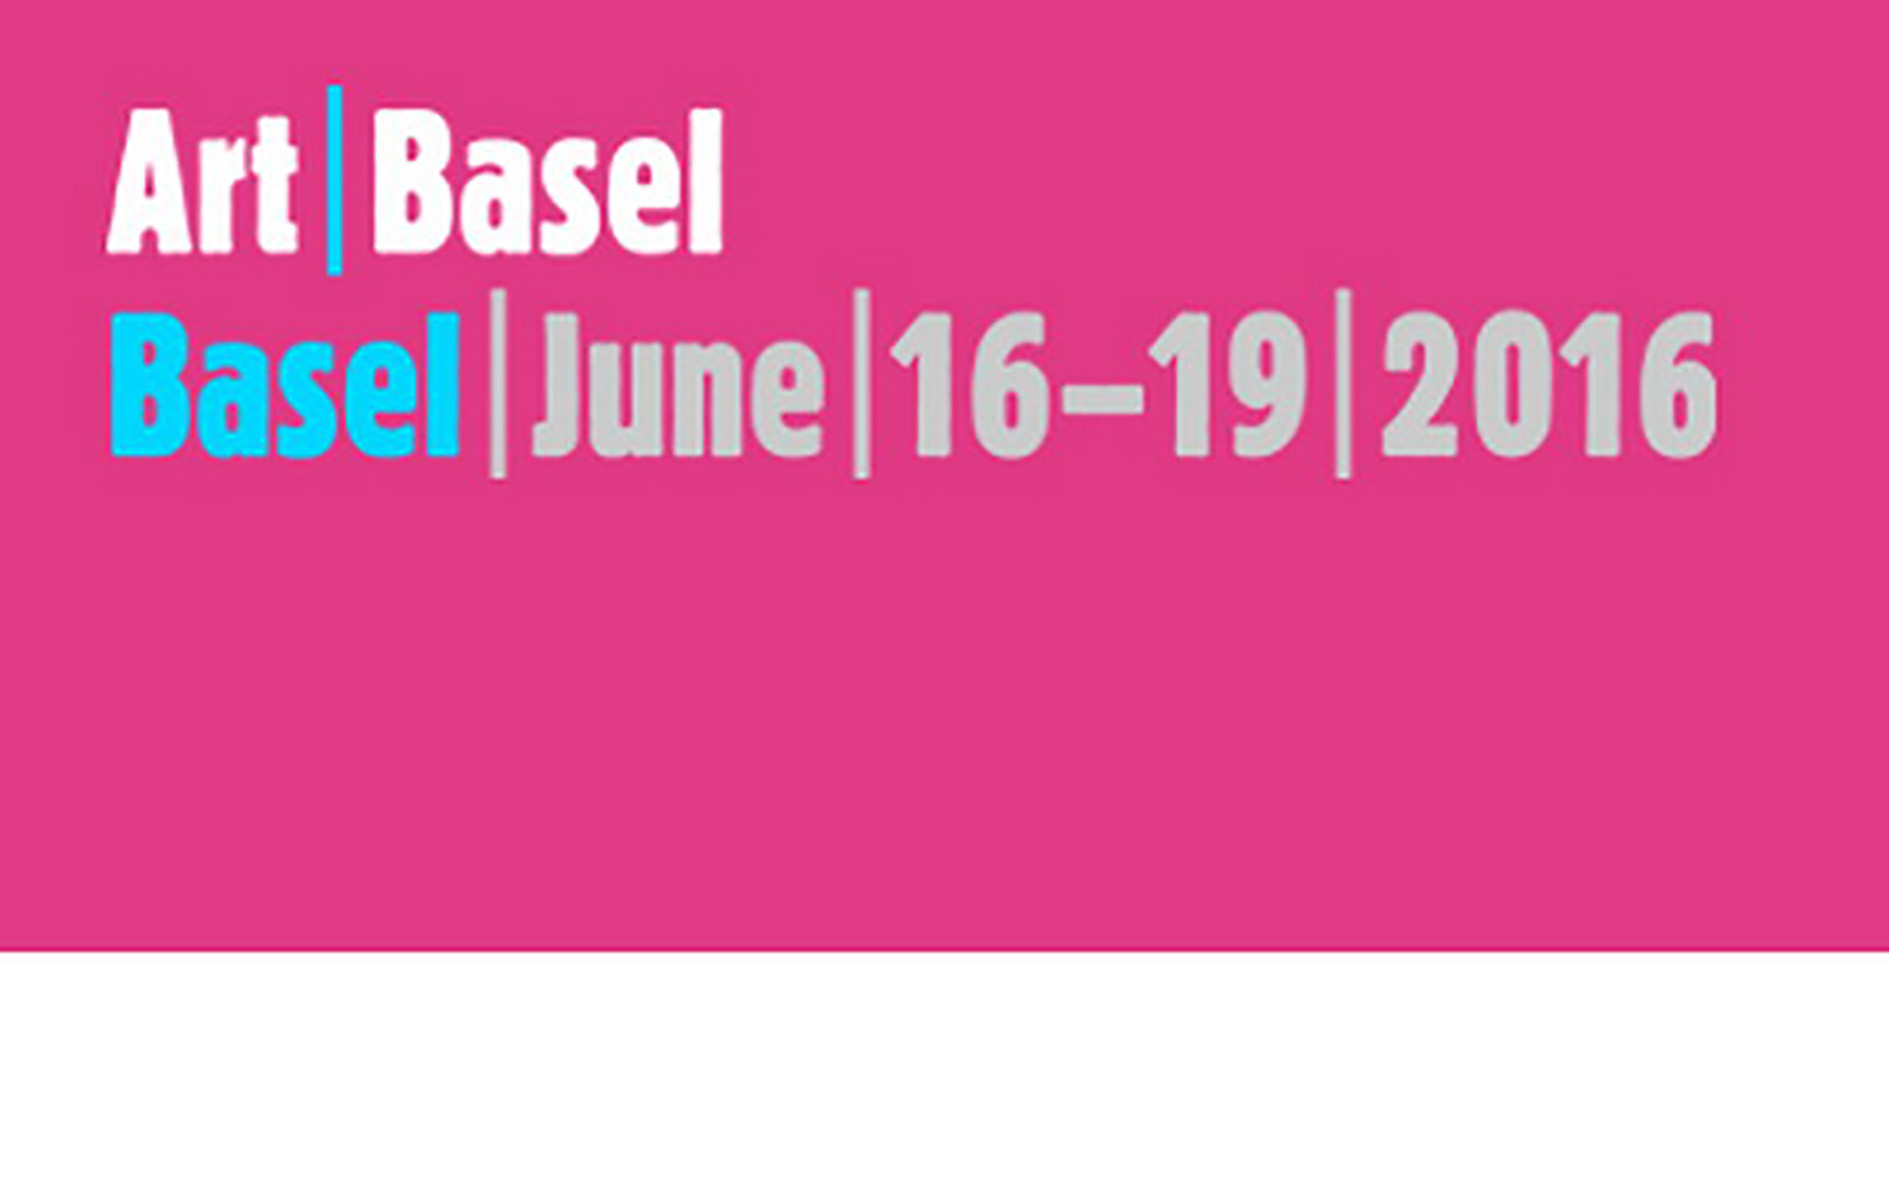 ART BASEL, BASEL, JUNE 16-19, 2016